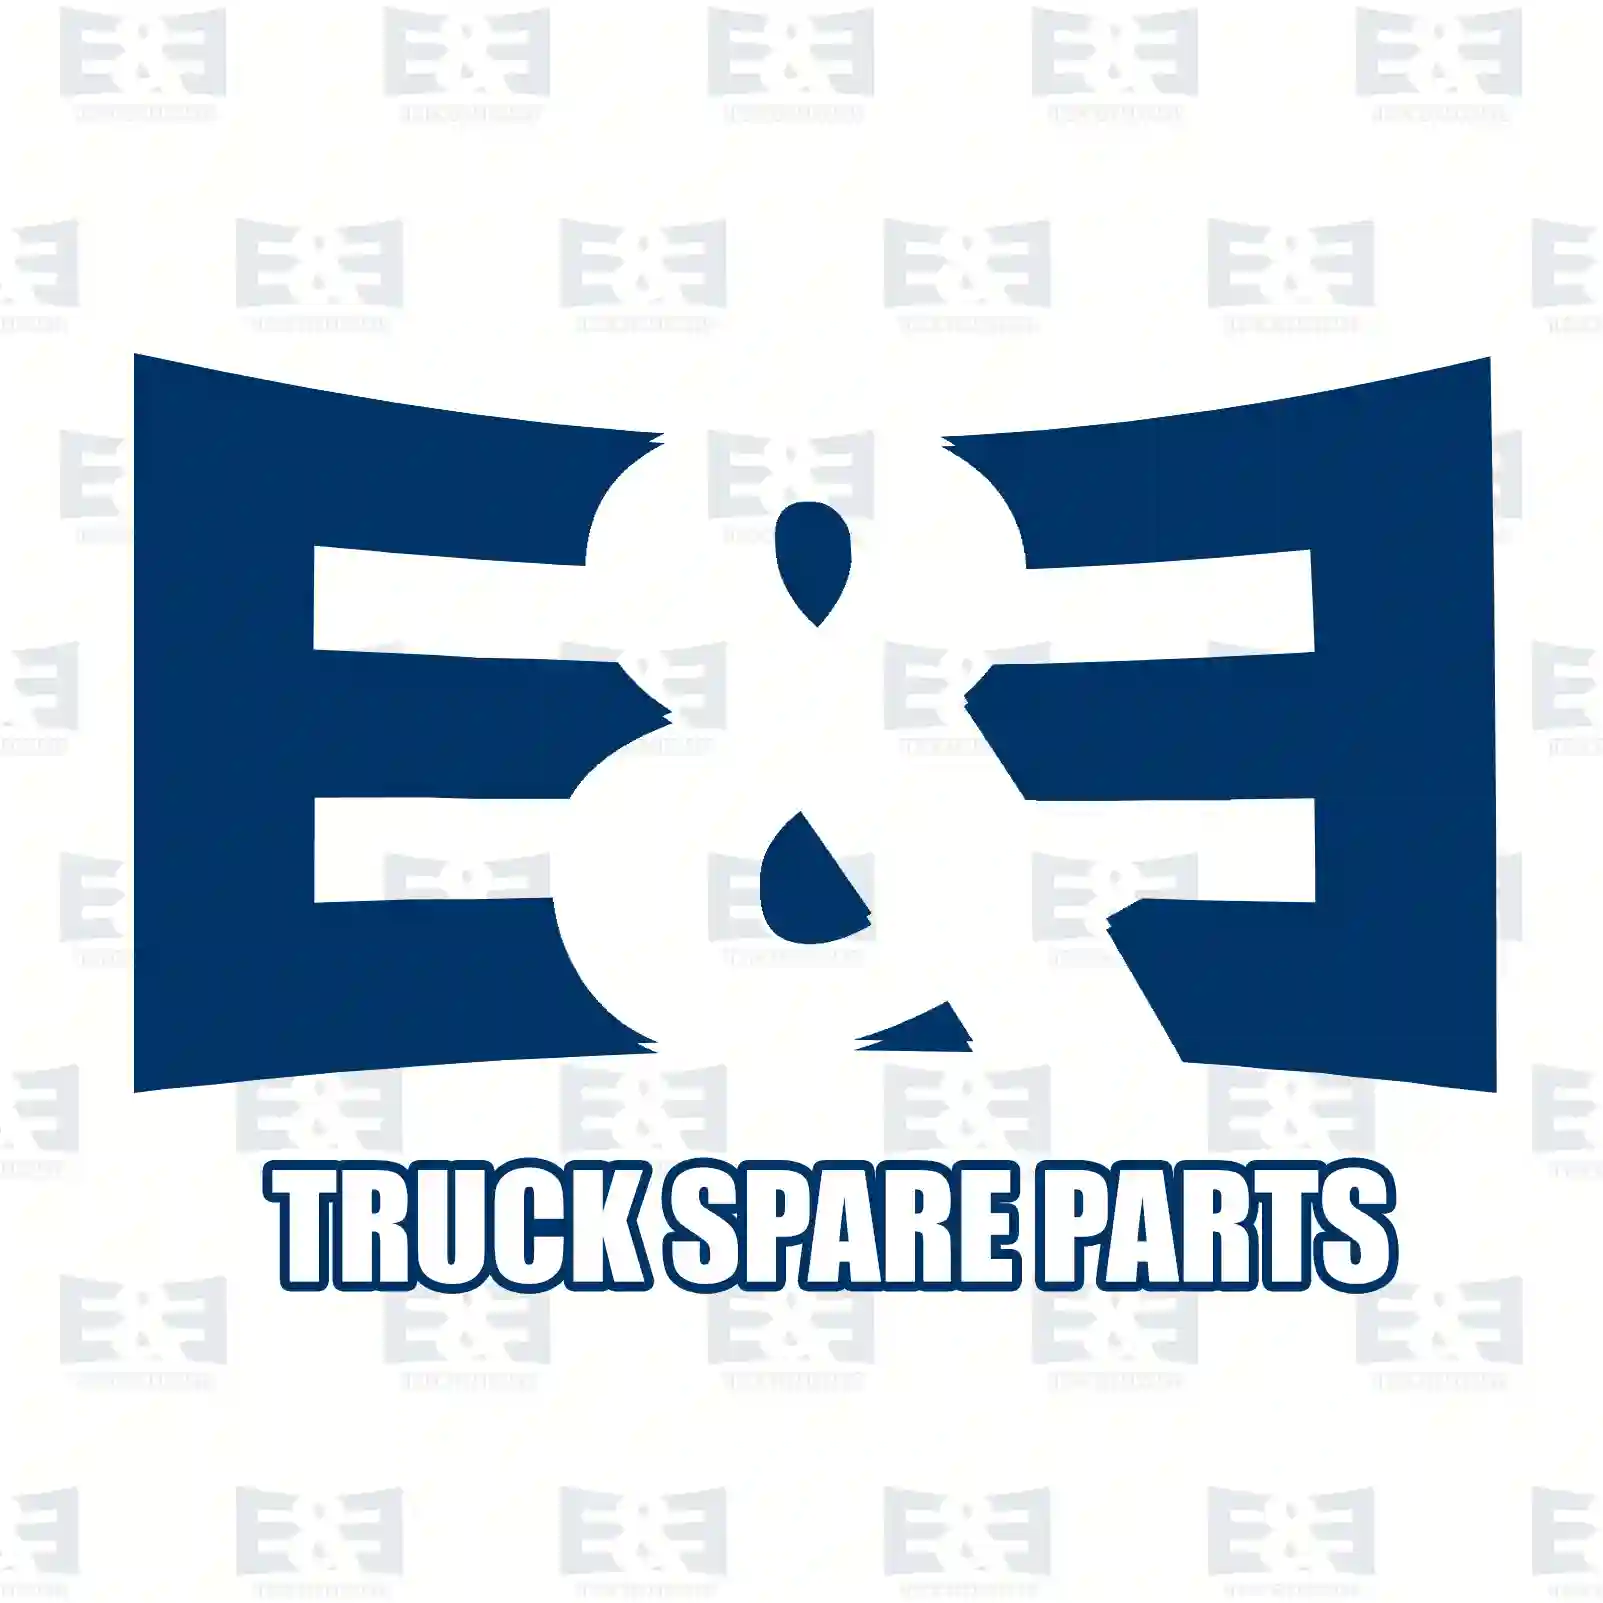  Solenoid valve, protection valve, air dryer || E&E Truck Spare Parts | Truck Spare Parts, Auotomotive Spare Parts